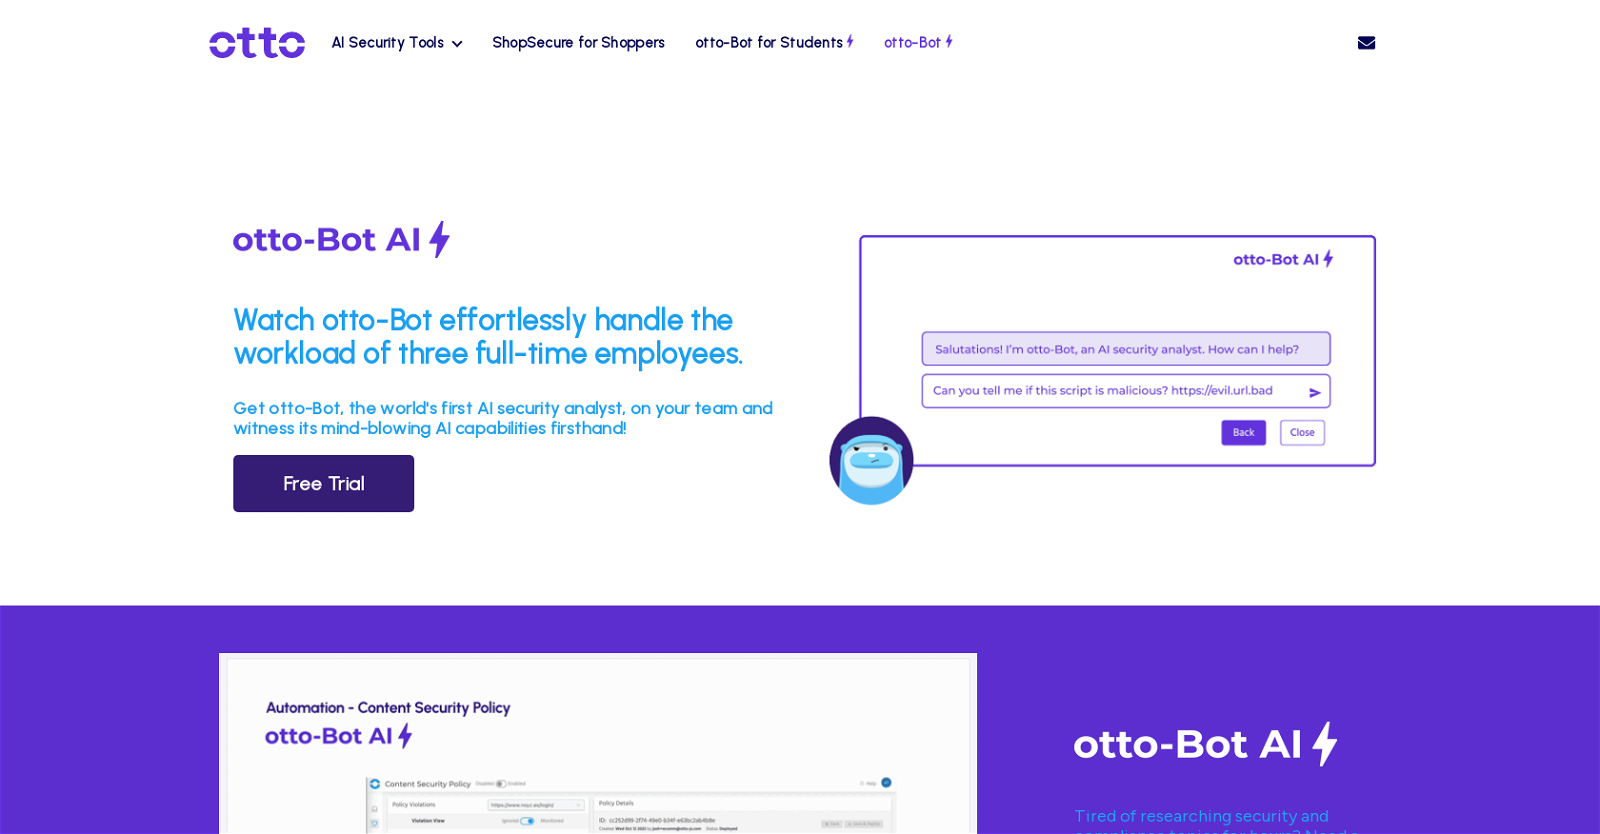 otto-Bot AI website